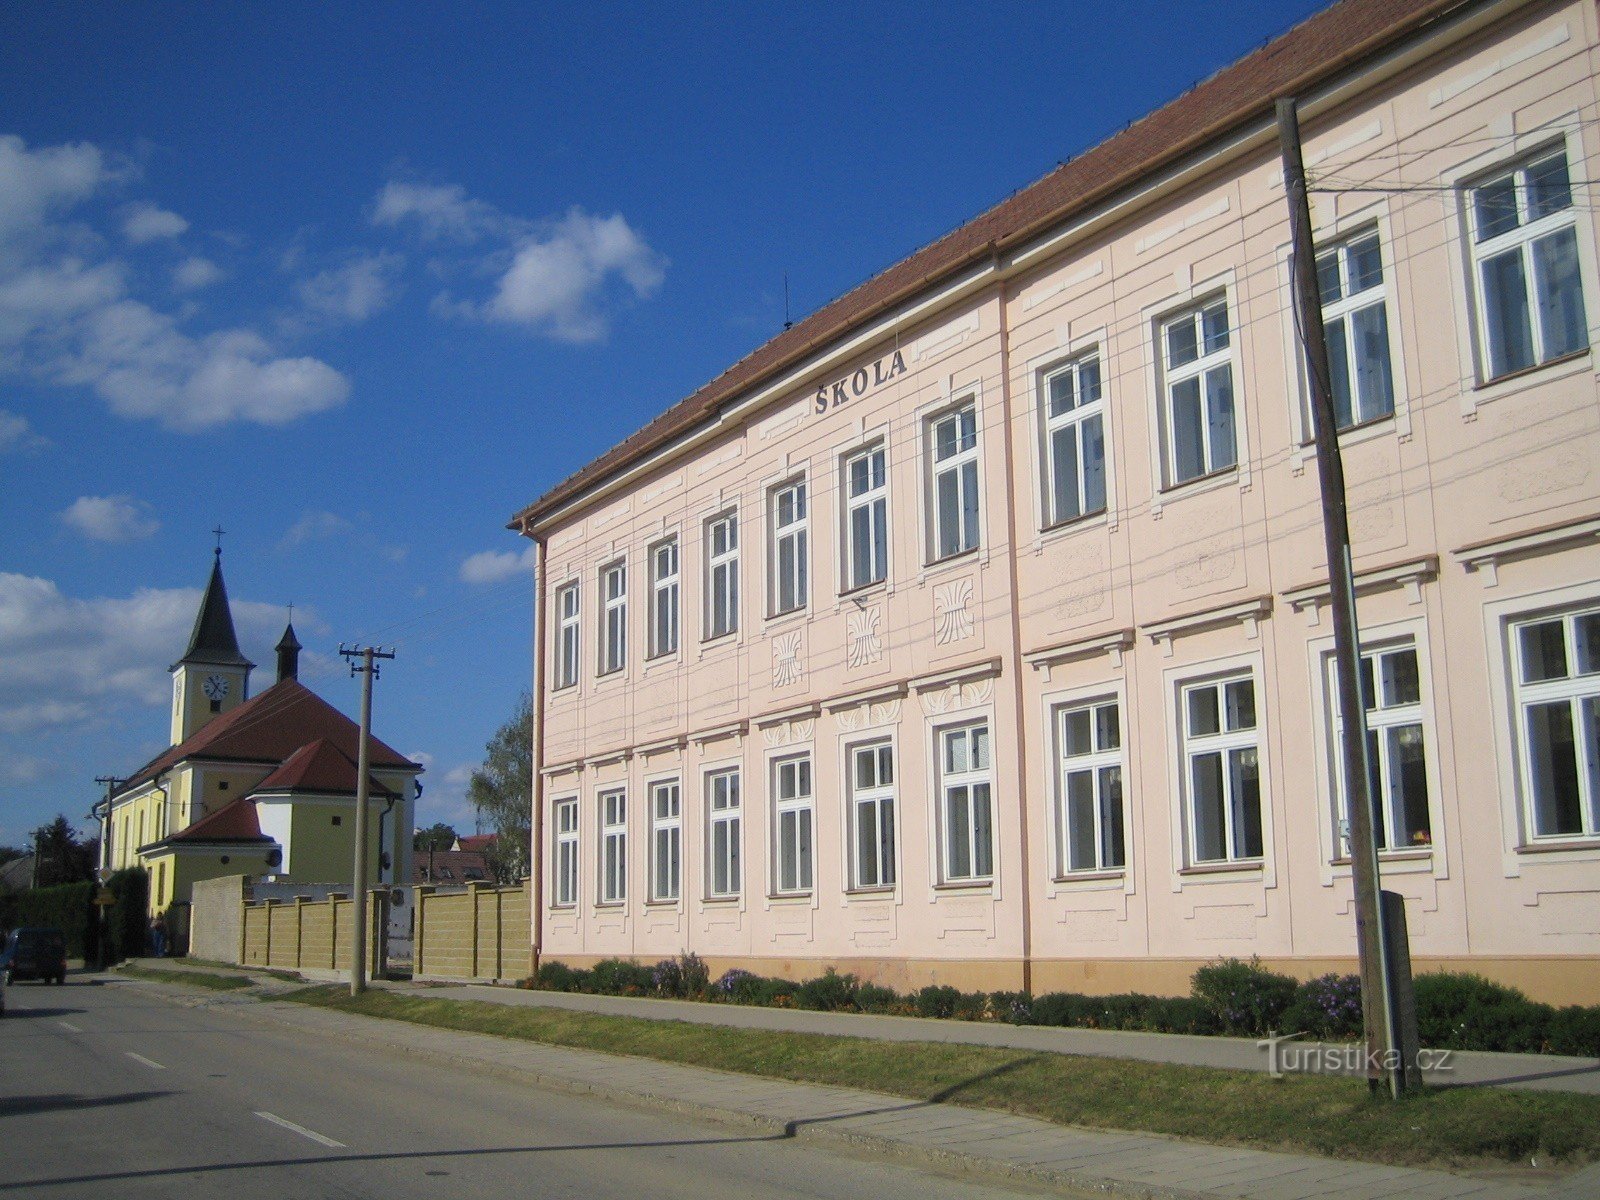 Topolná - skole og kirke